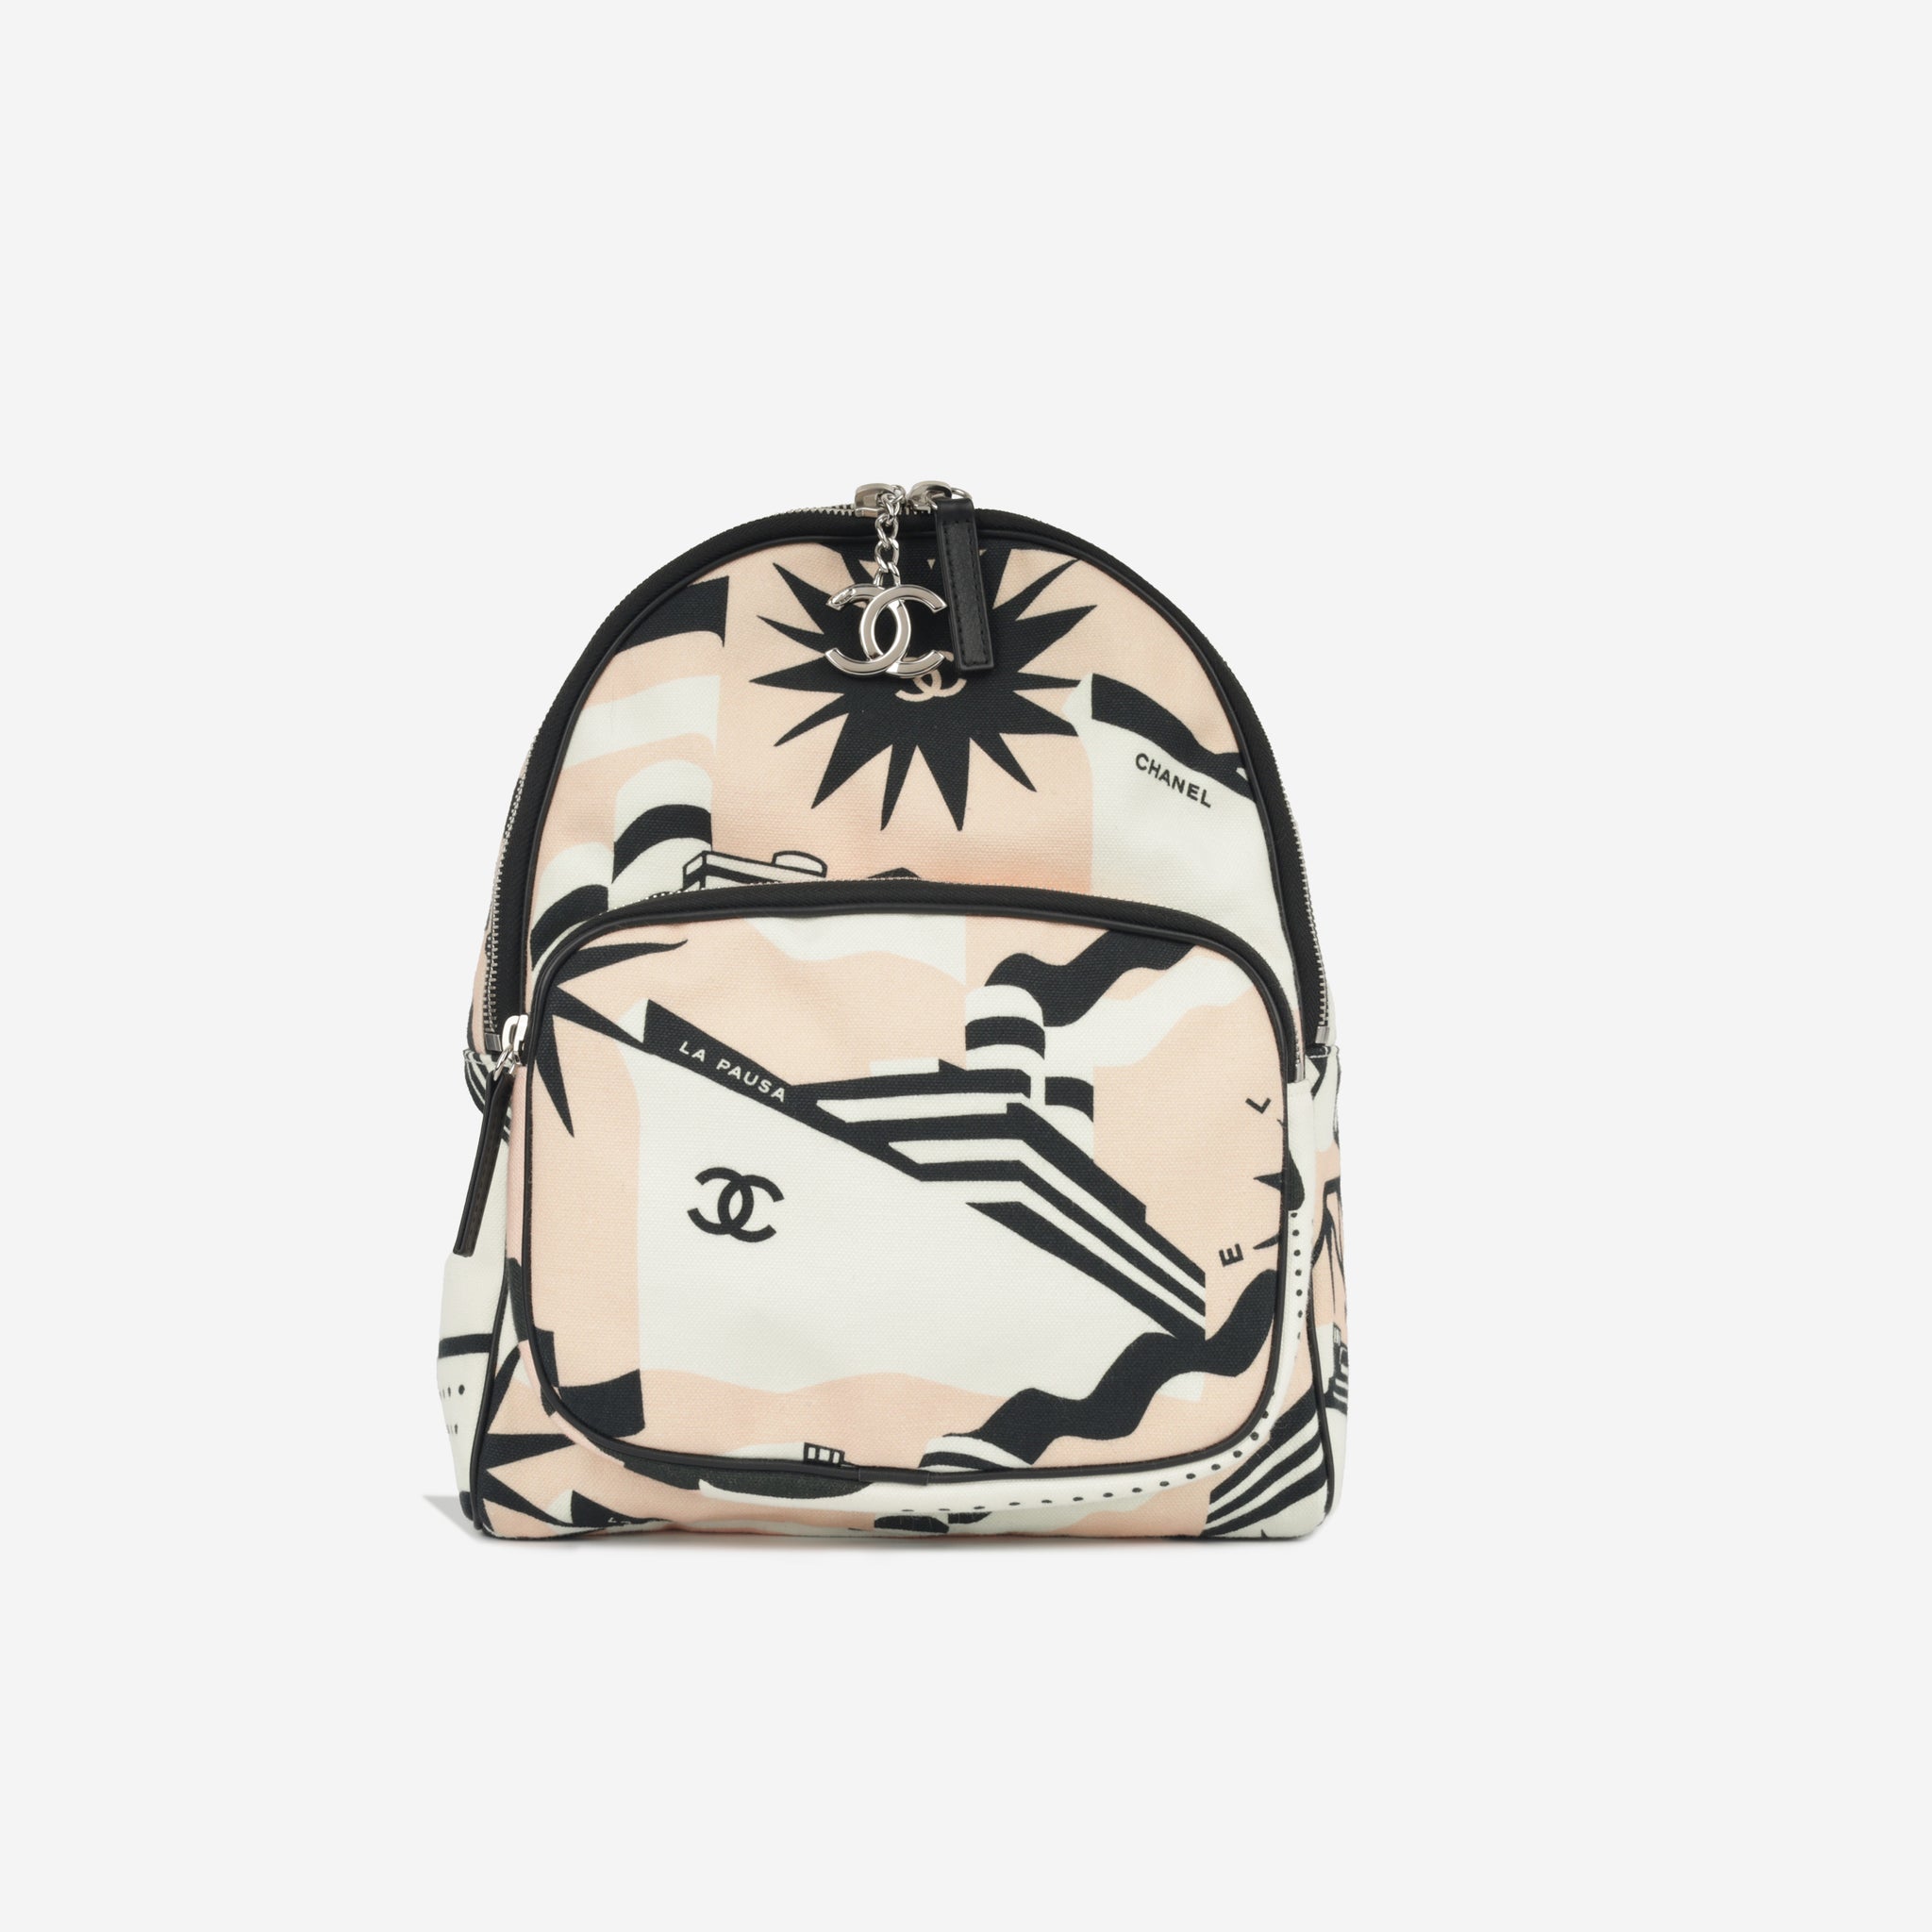 Chanel Limited Edition La Pausa Bag